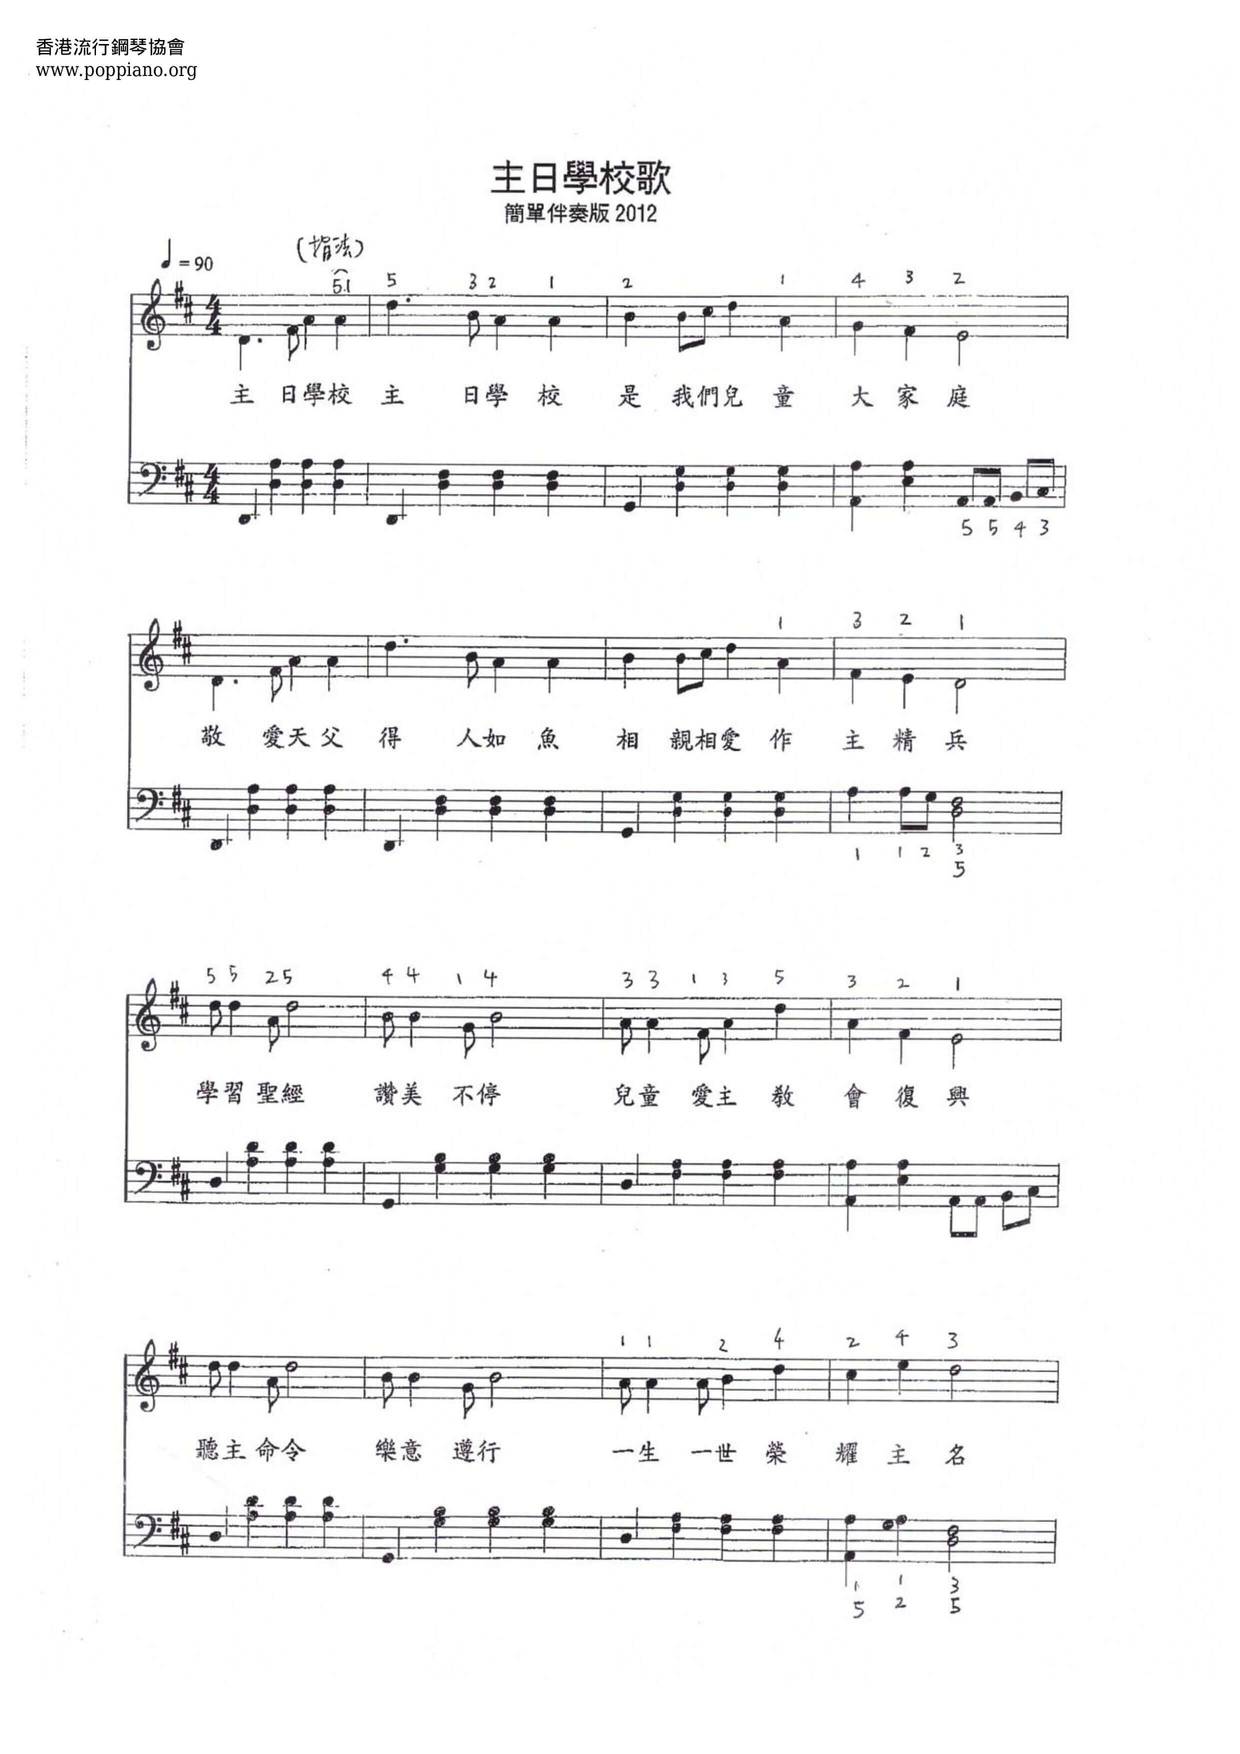 Sunday School Song Score